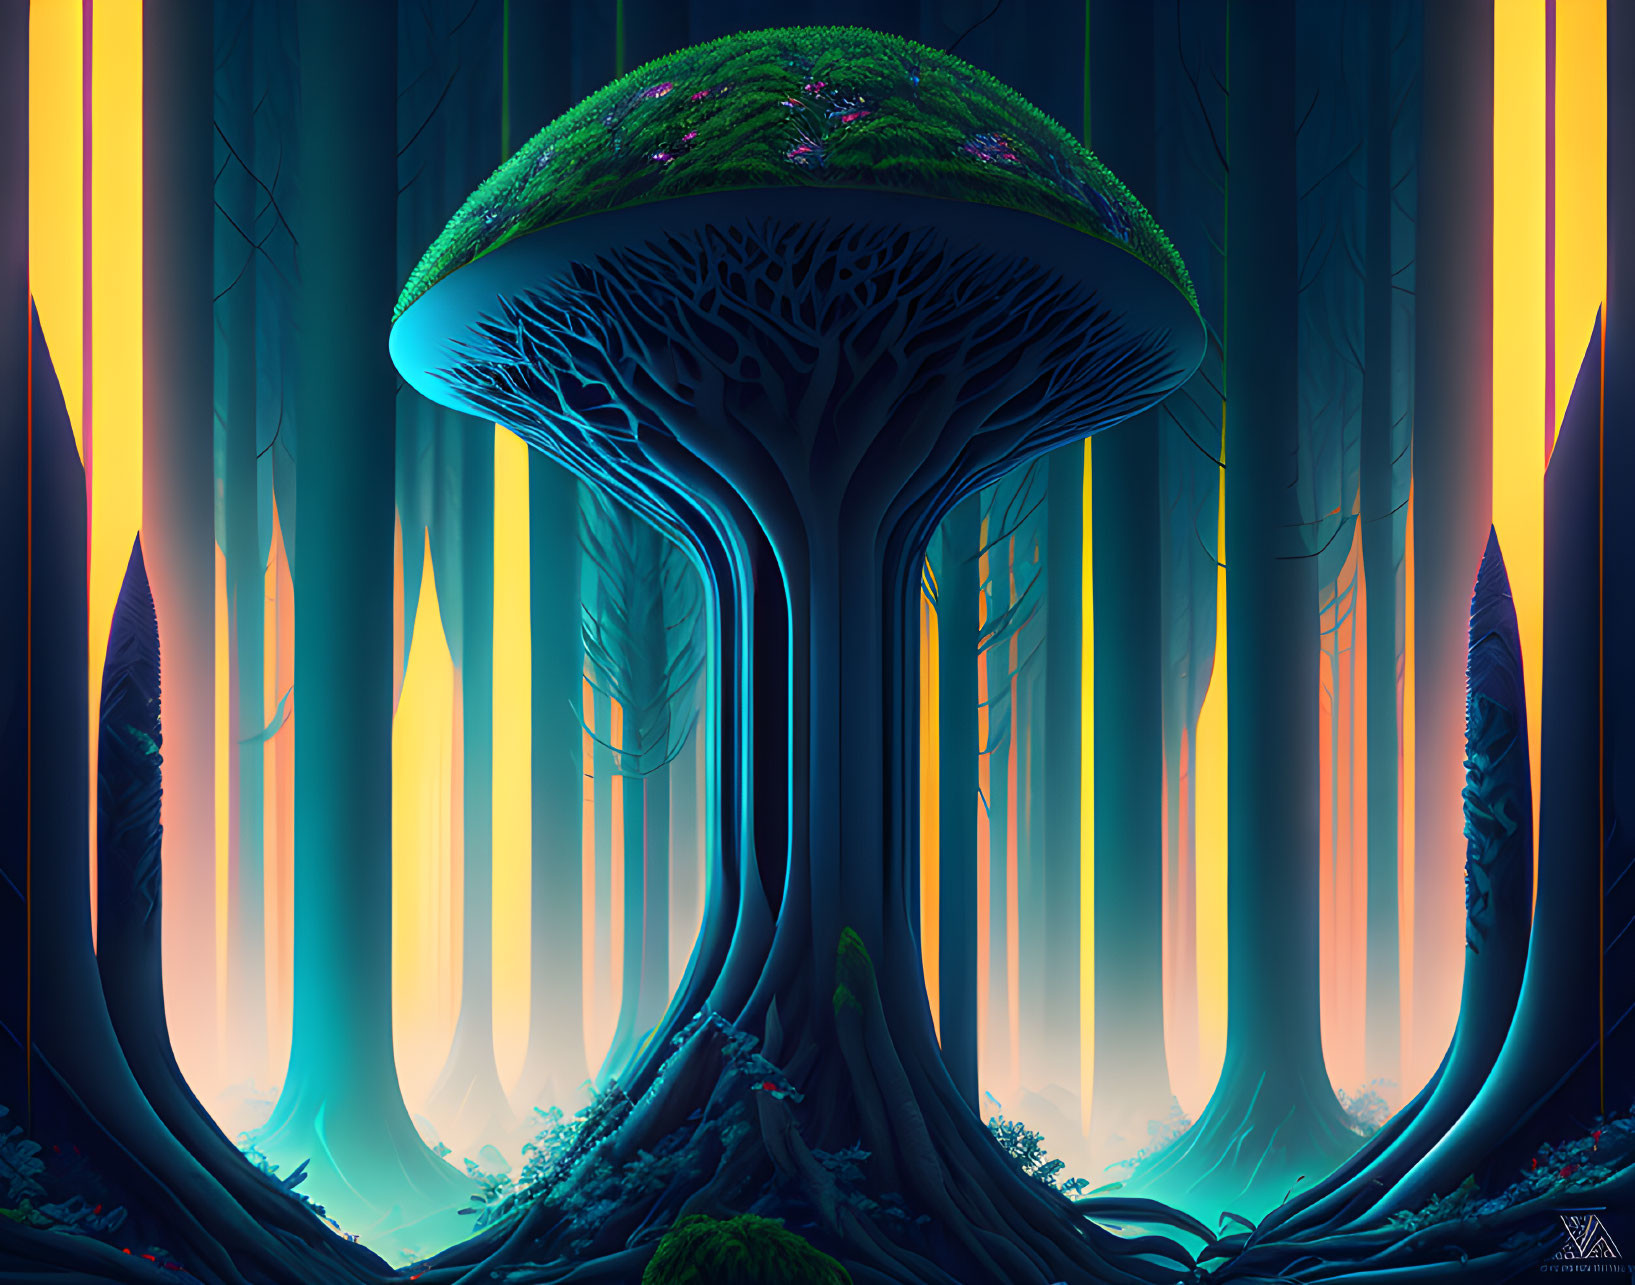 Fantastical forest scene with oversized mushroom and tree-like stem